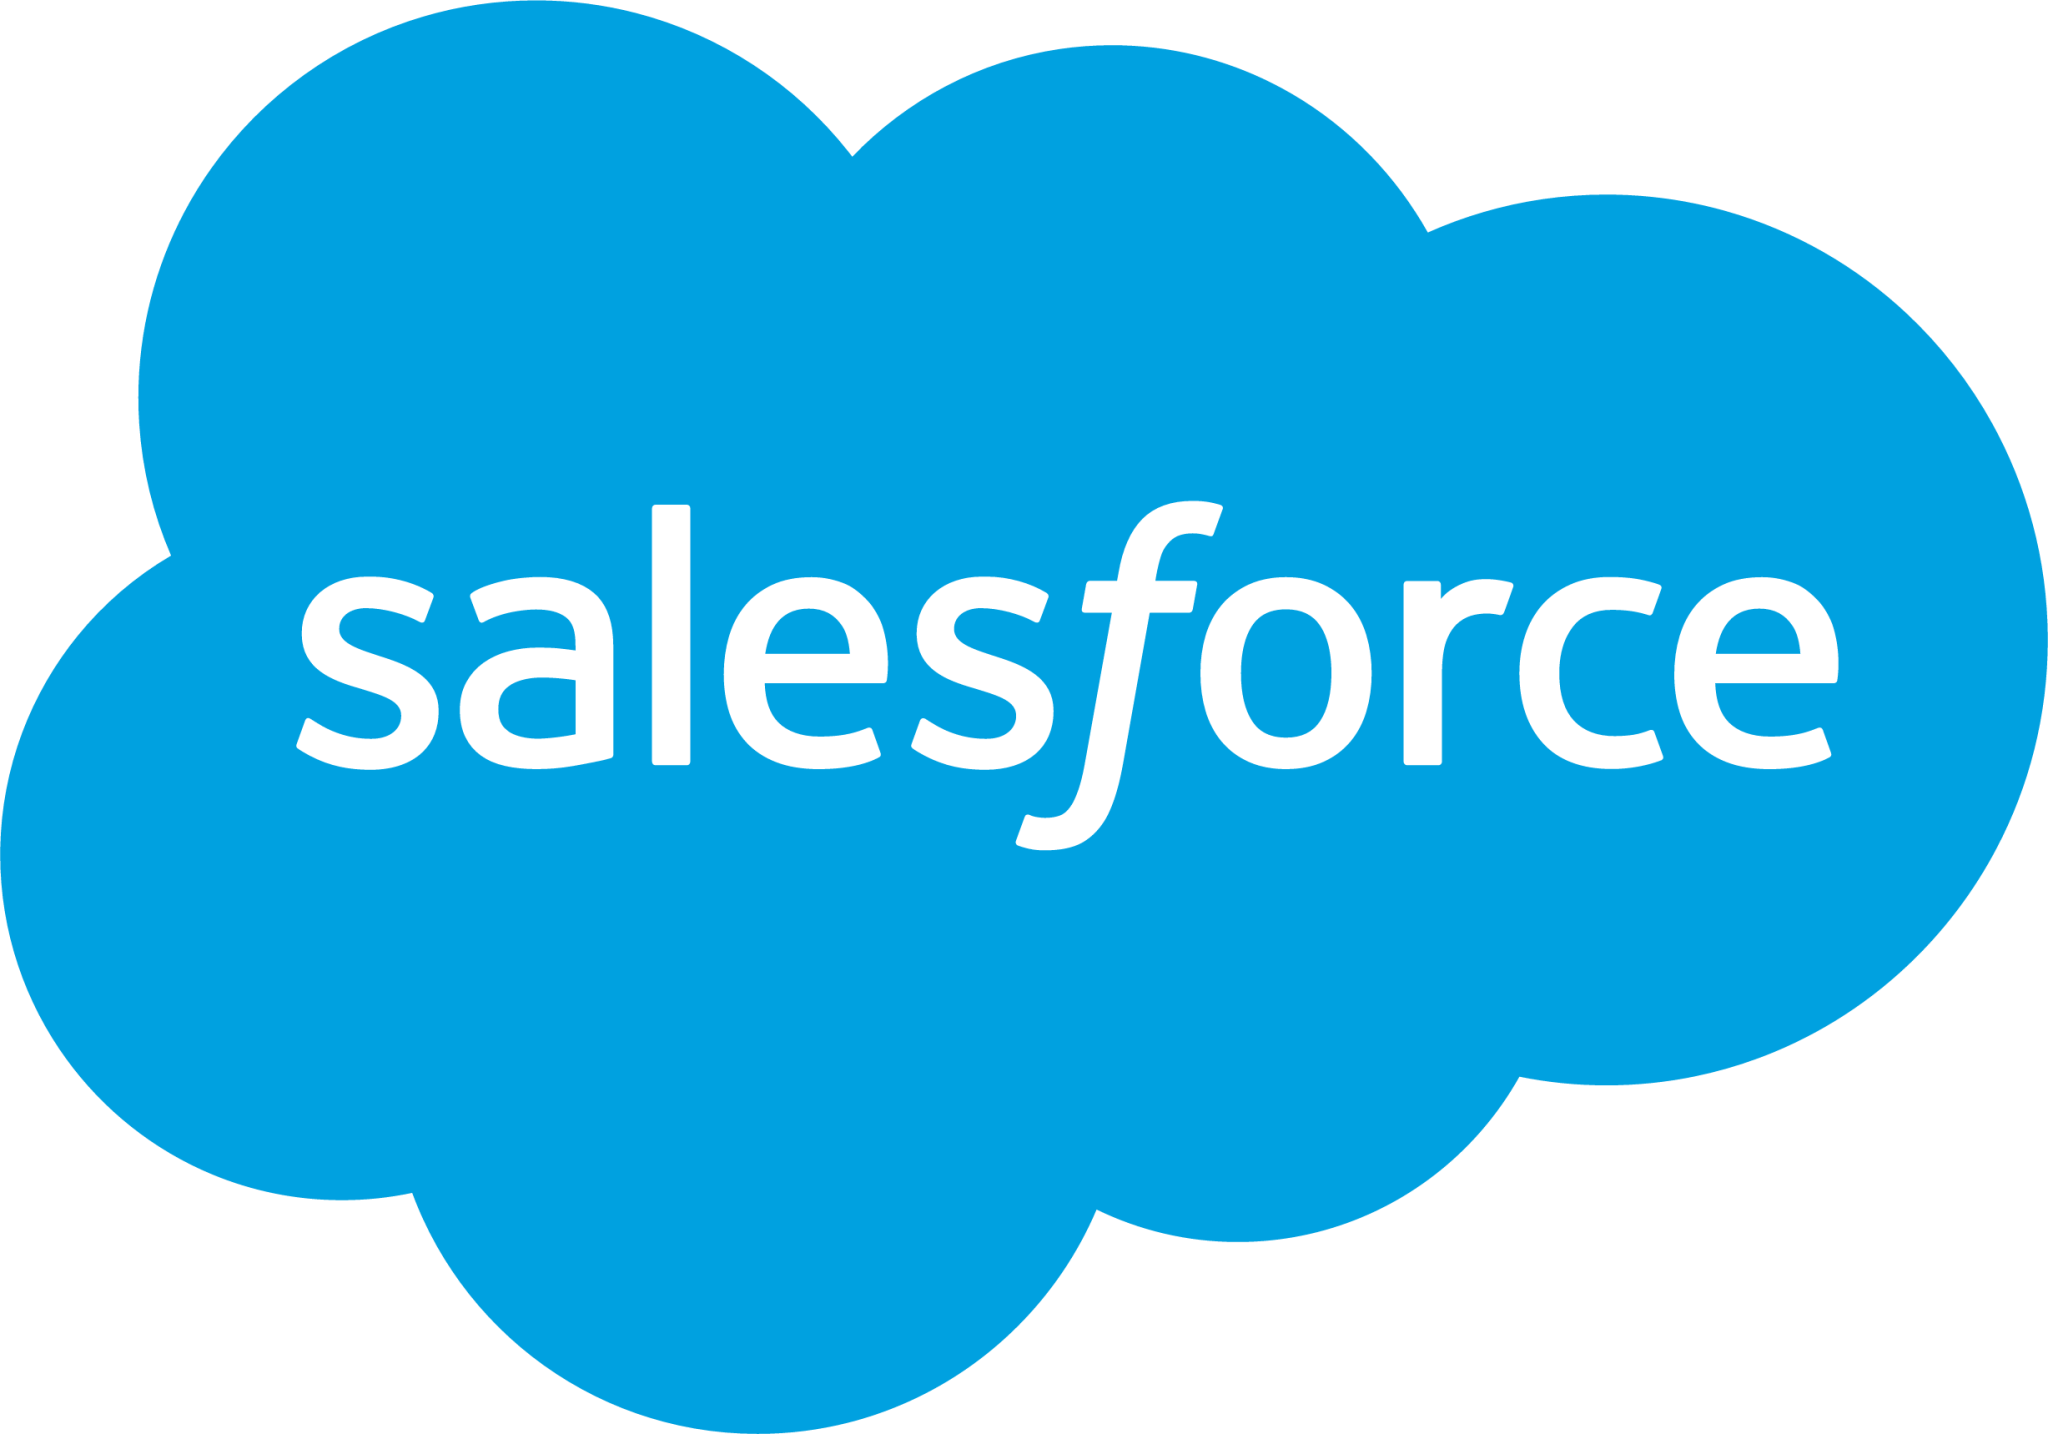 salesforce icon for presentation